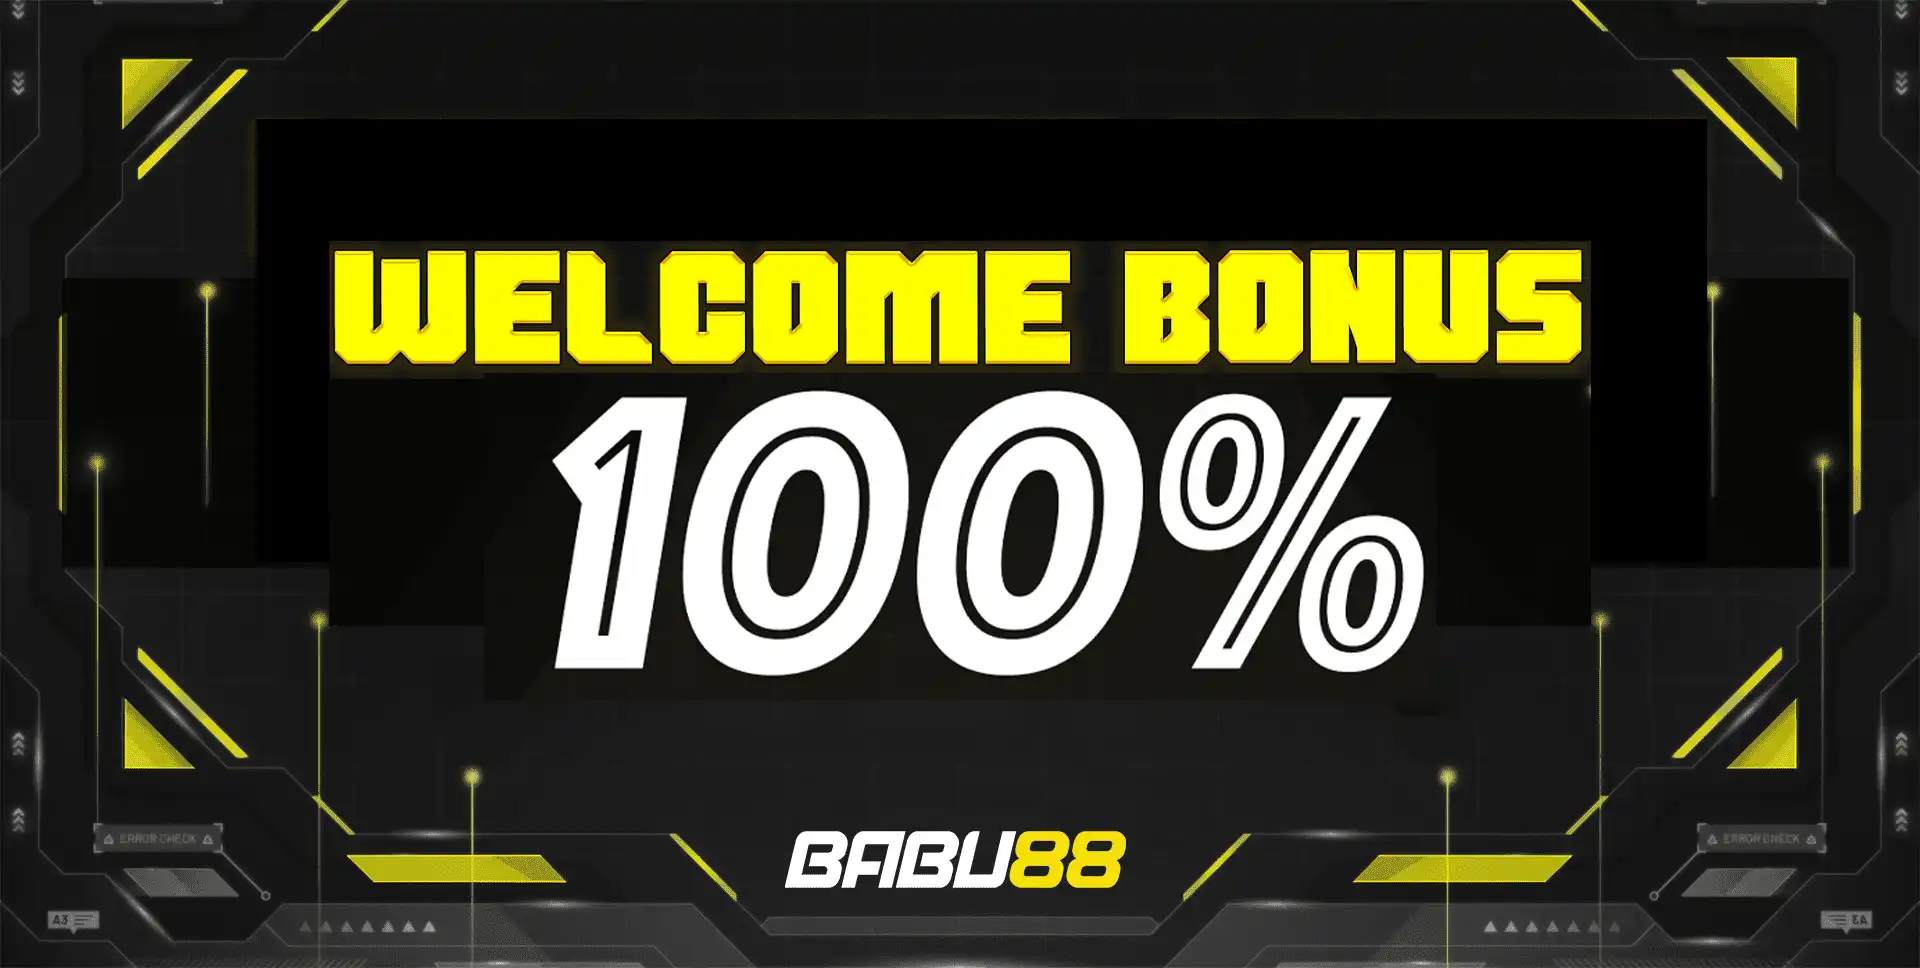 Babu88 - The Ultimate Online Betting Platform